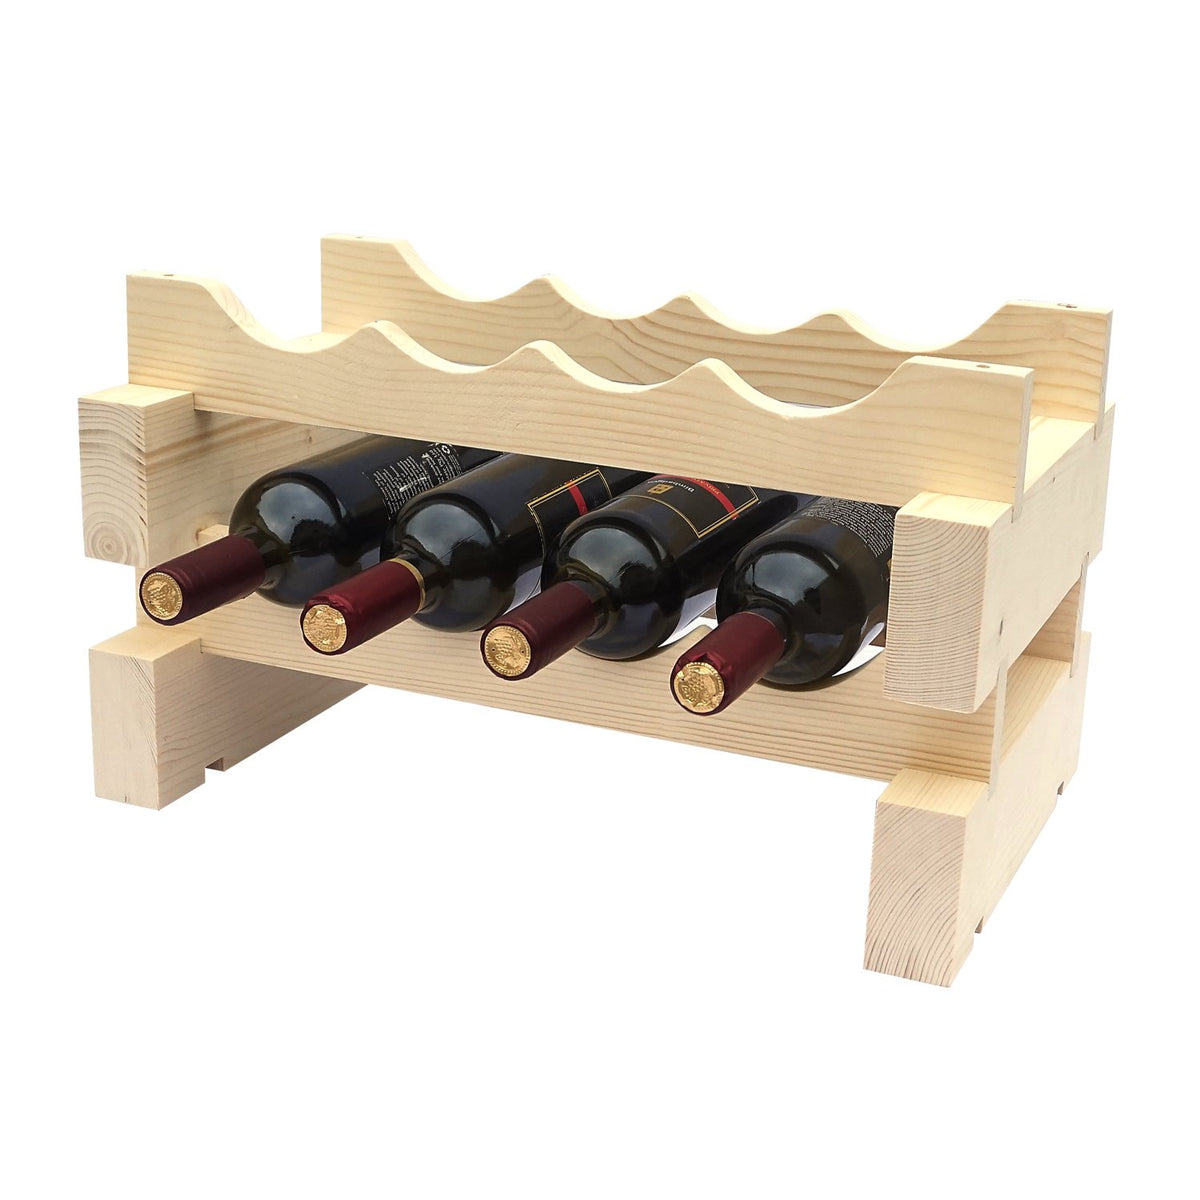 4 Bottle Modular Wine Rack - Natural Finish